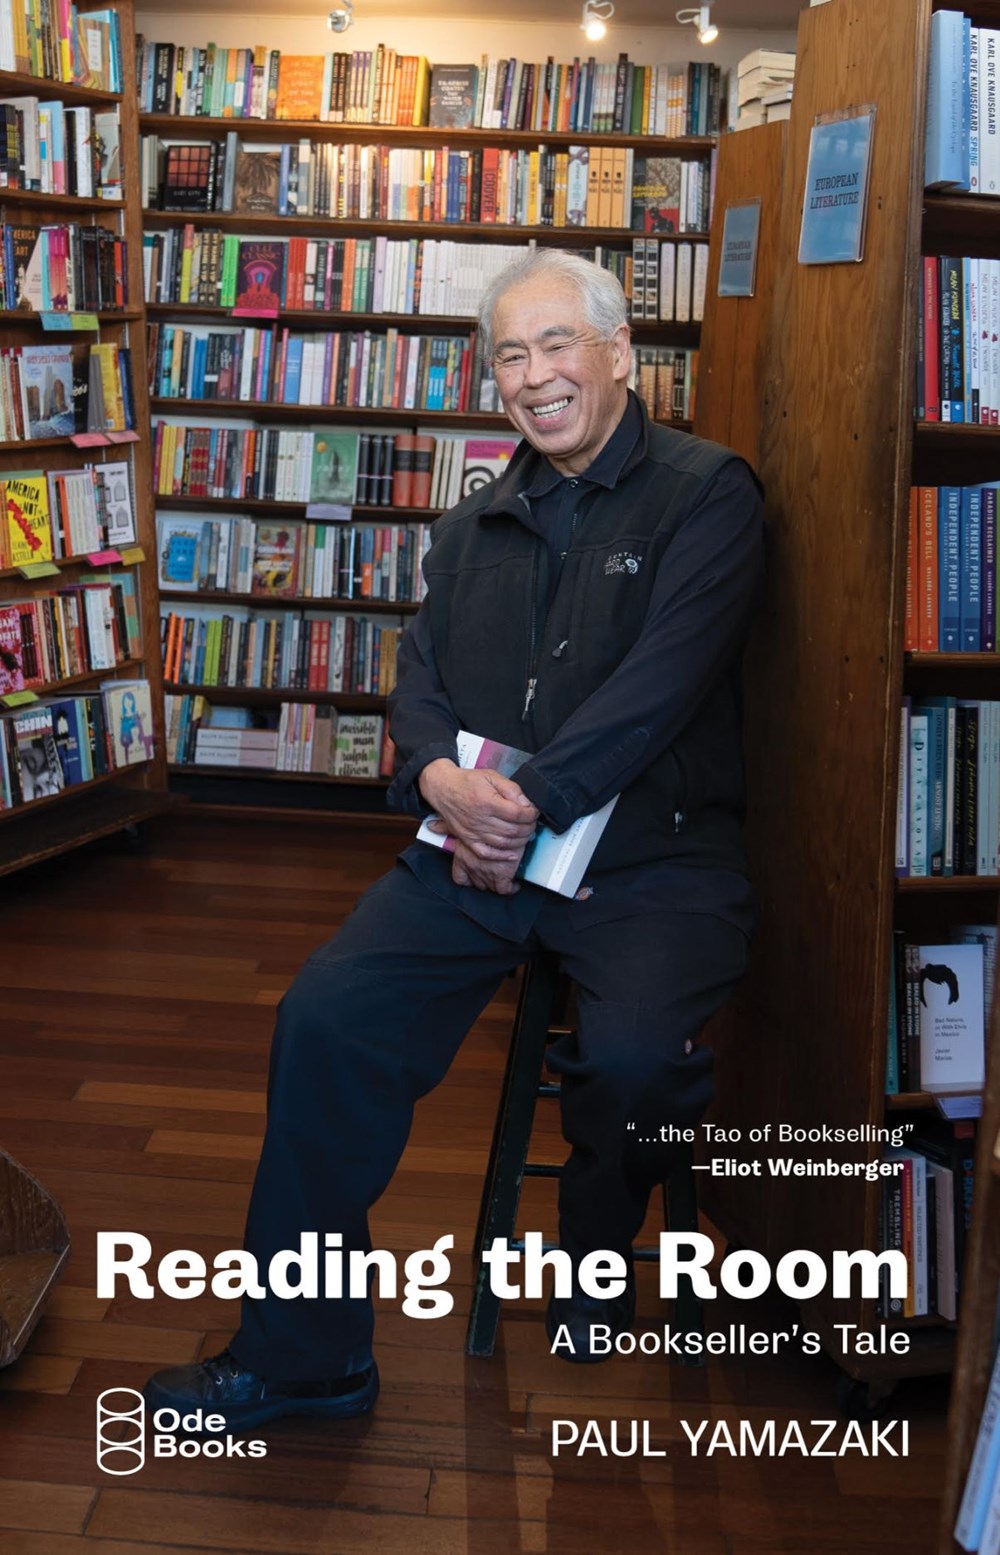 Reading the Room by Paul Yamazaki